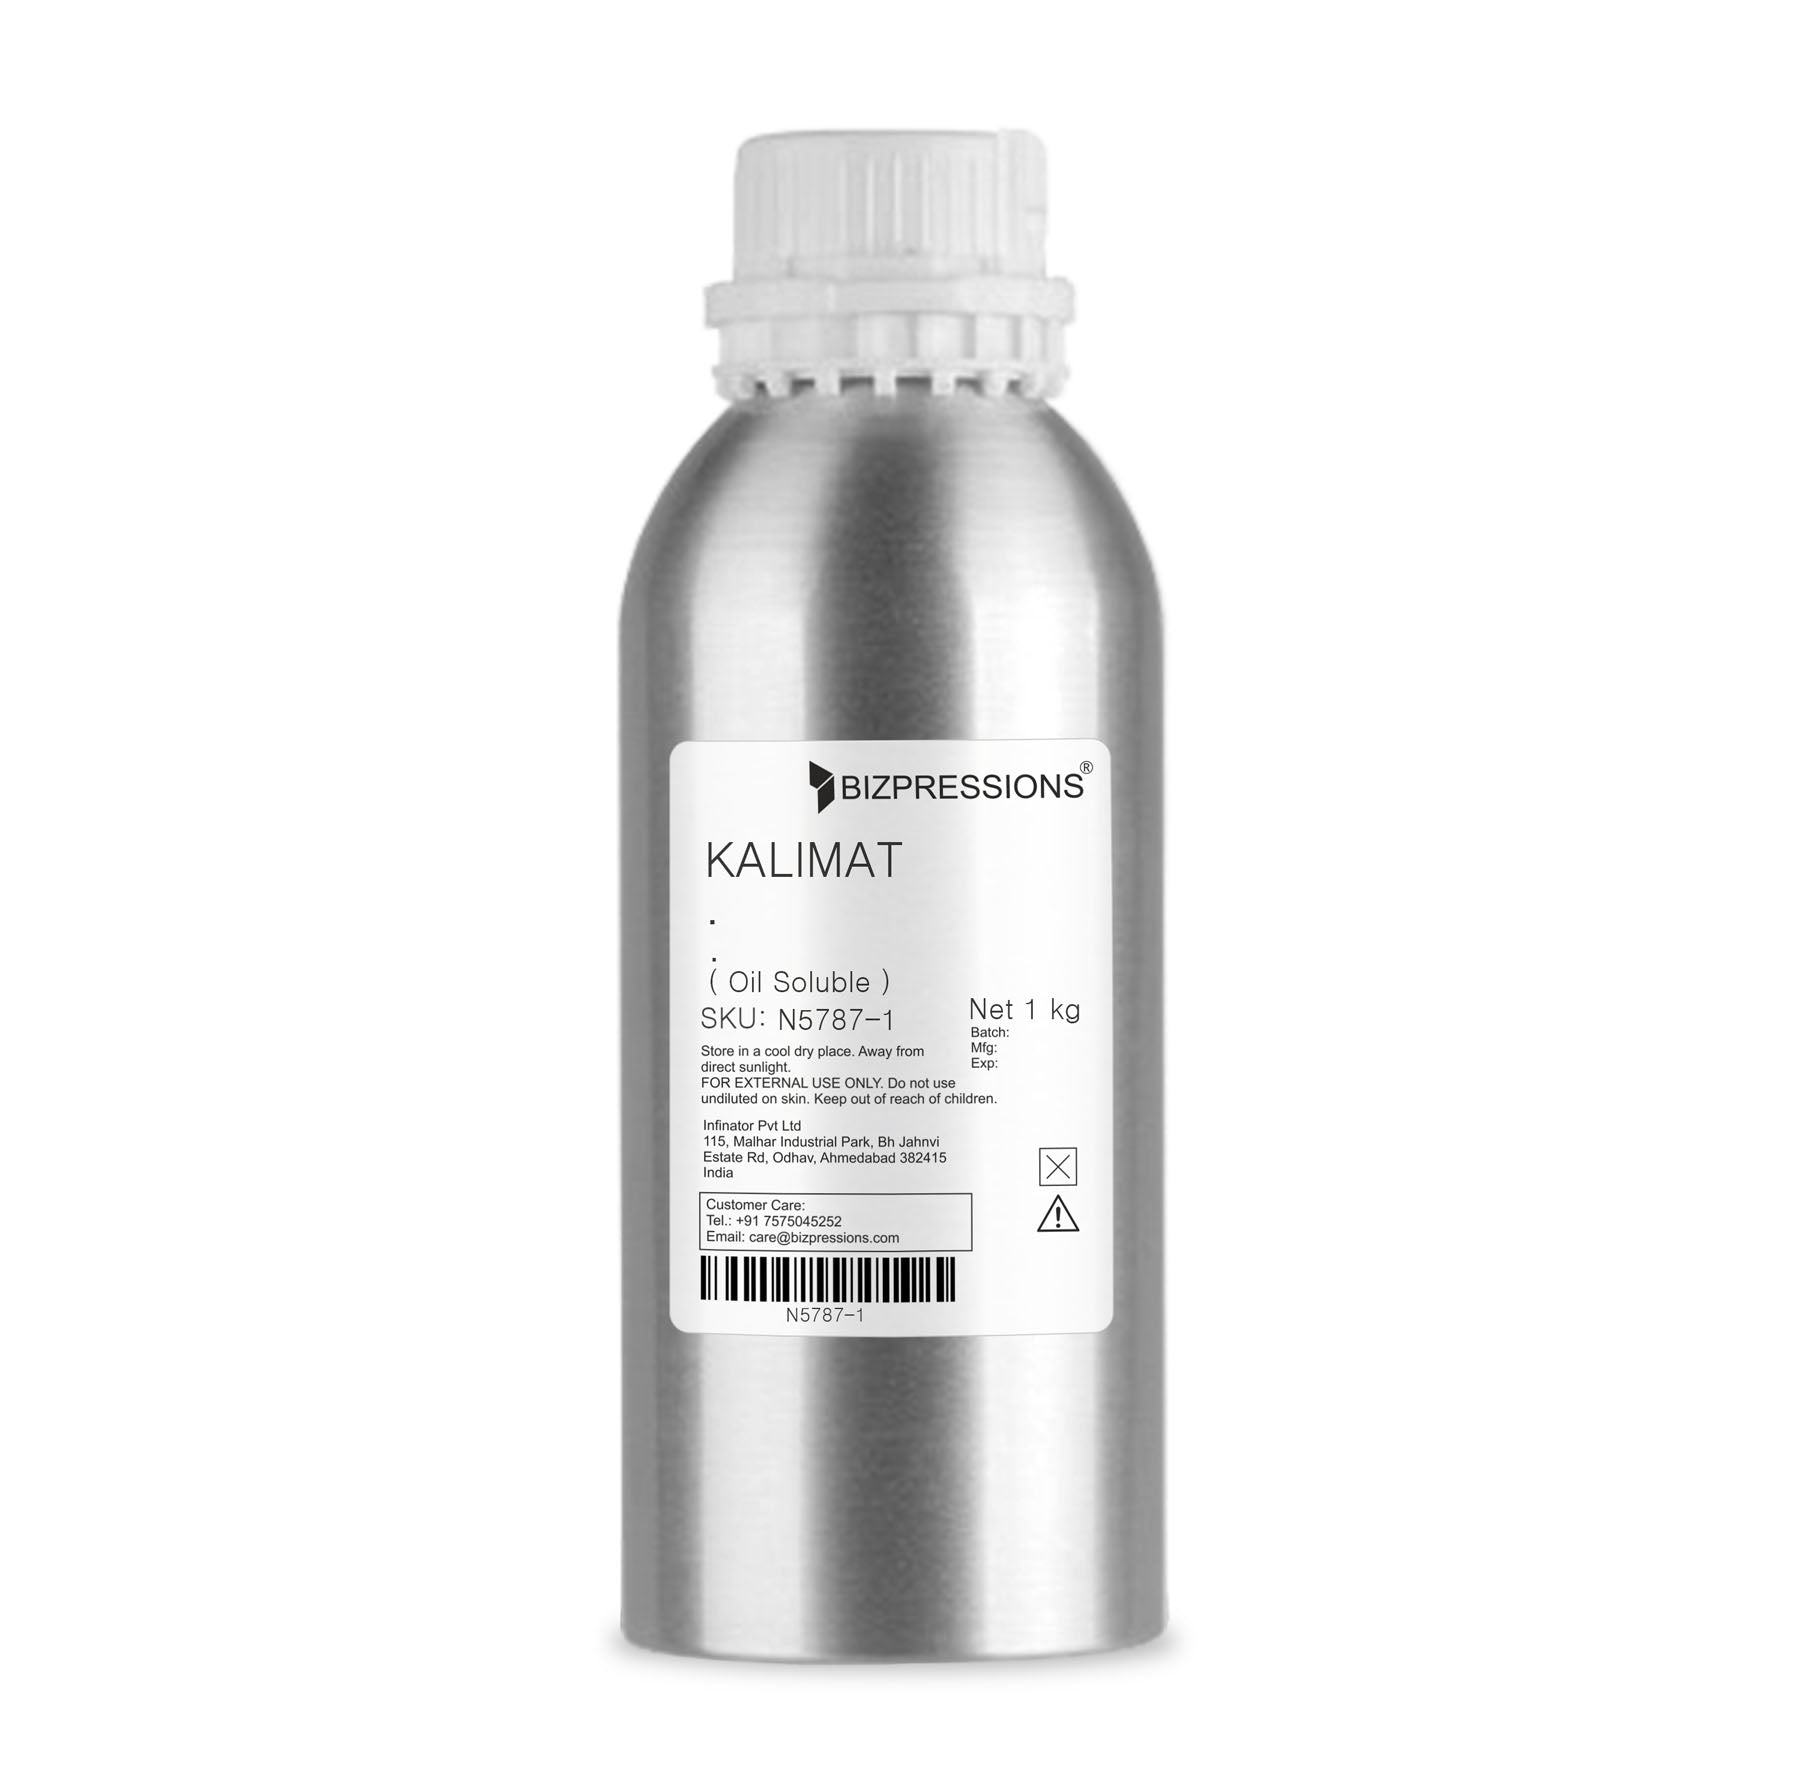 KALIMAT - Fragrance ( Oil Soluble ) - 1 kg